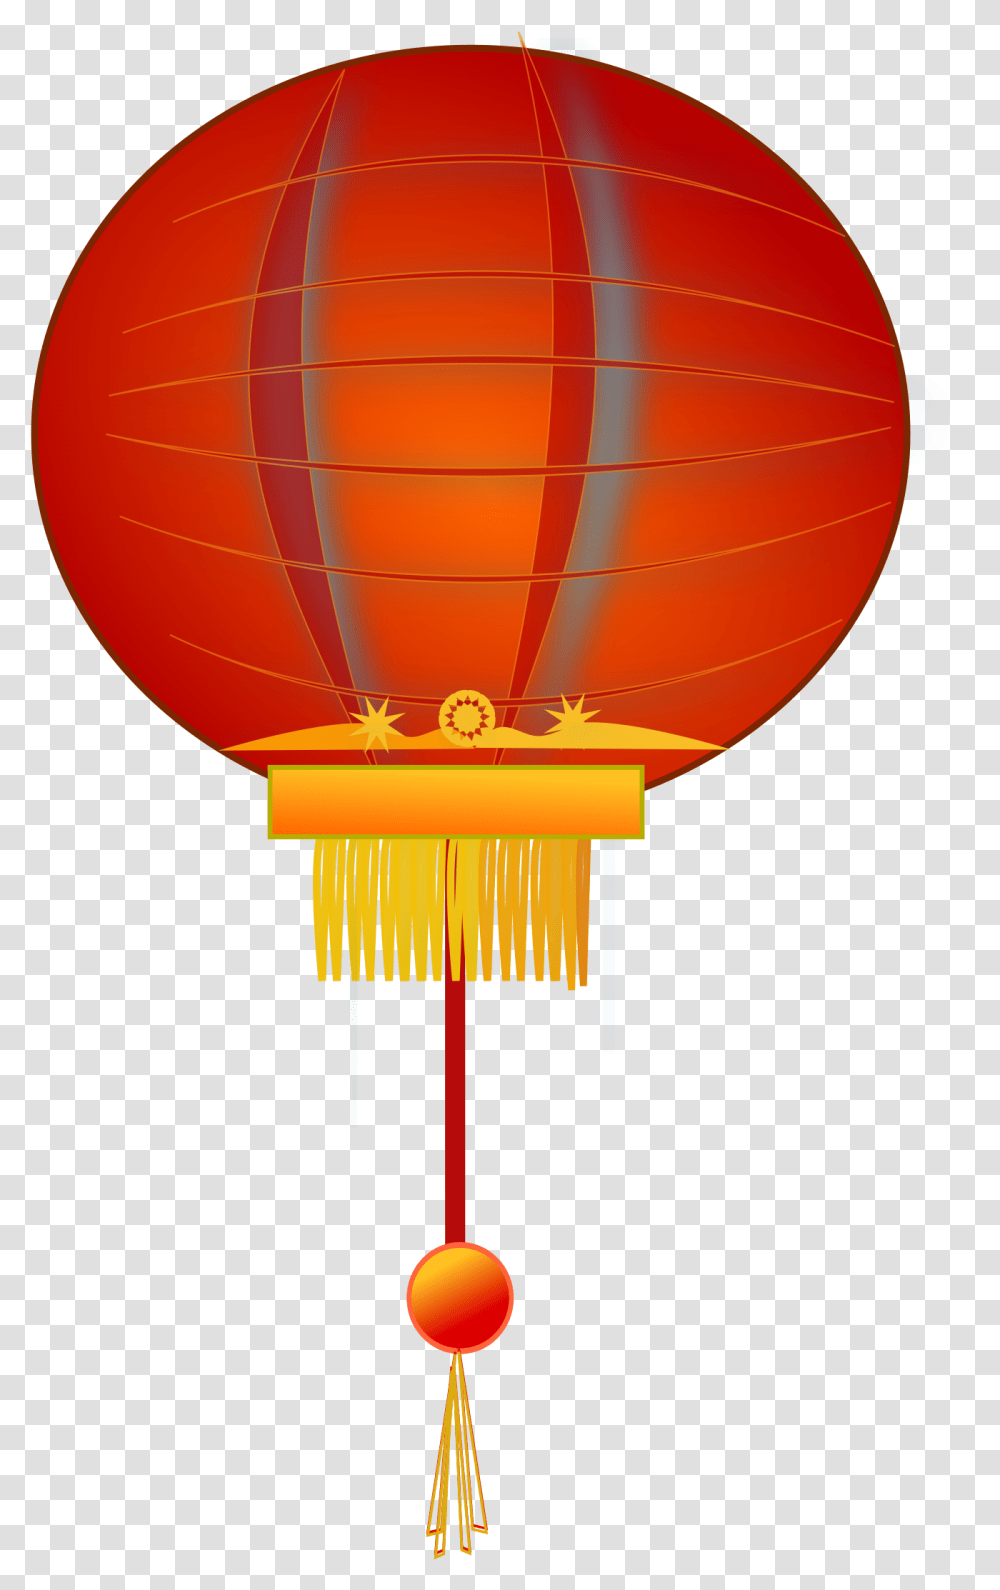 Diwali Hanging Lamps 1 Image Background Chinese Lantern Clipart, Balloon, Hot Air Balloon, Aircraft, Vehicle Transparent Png